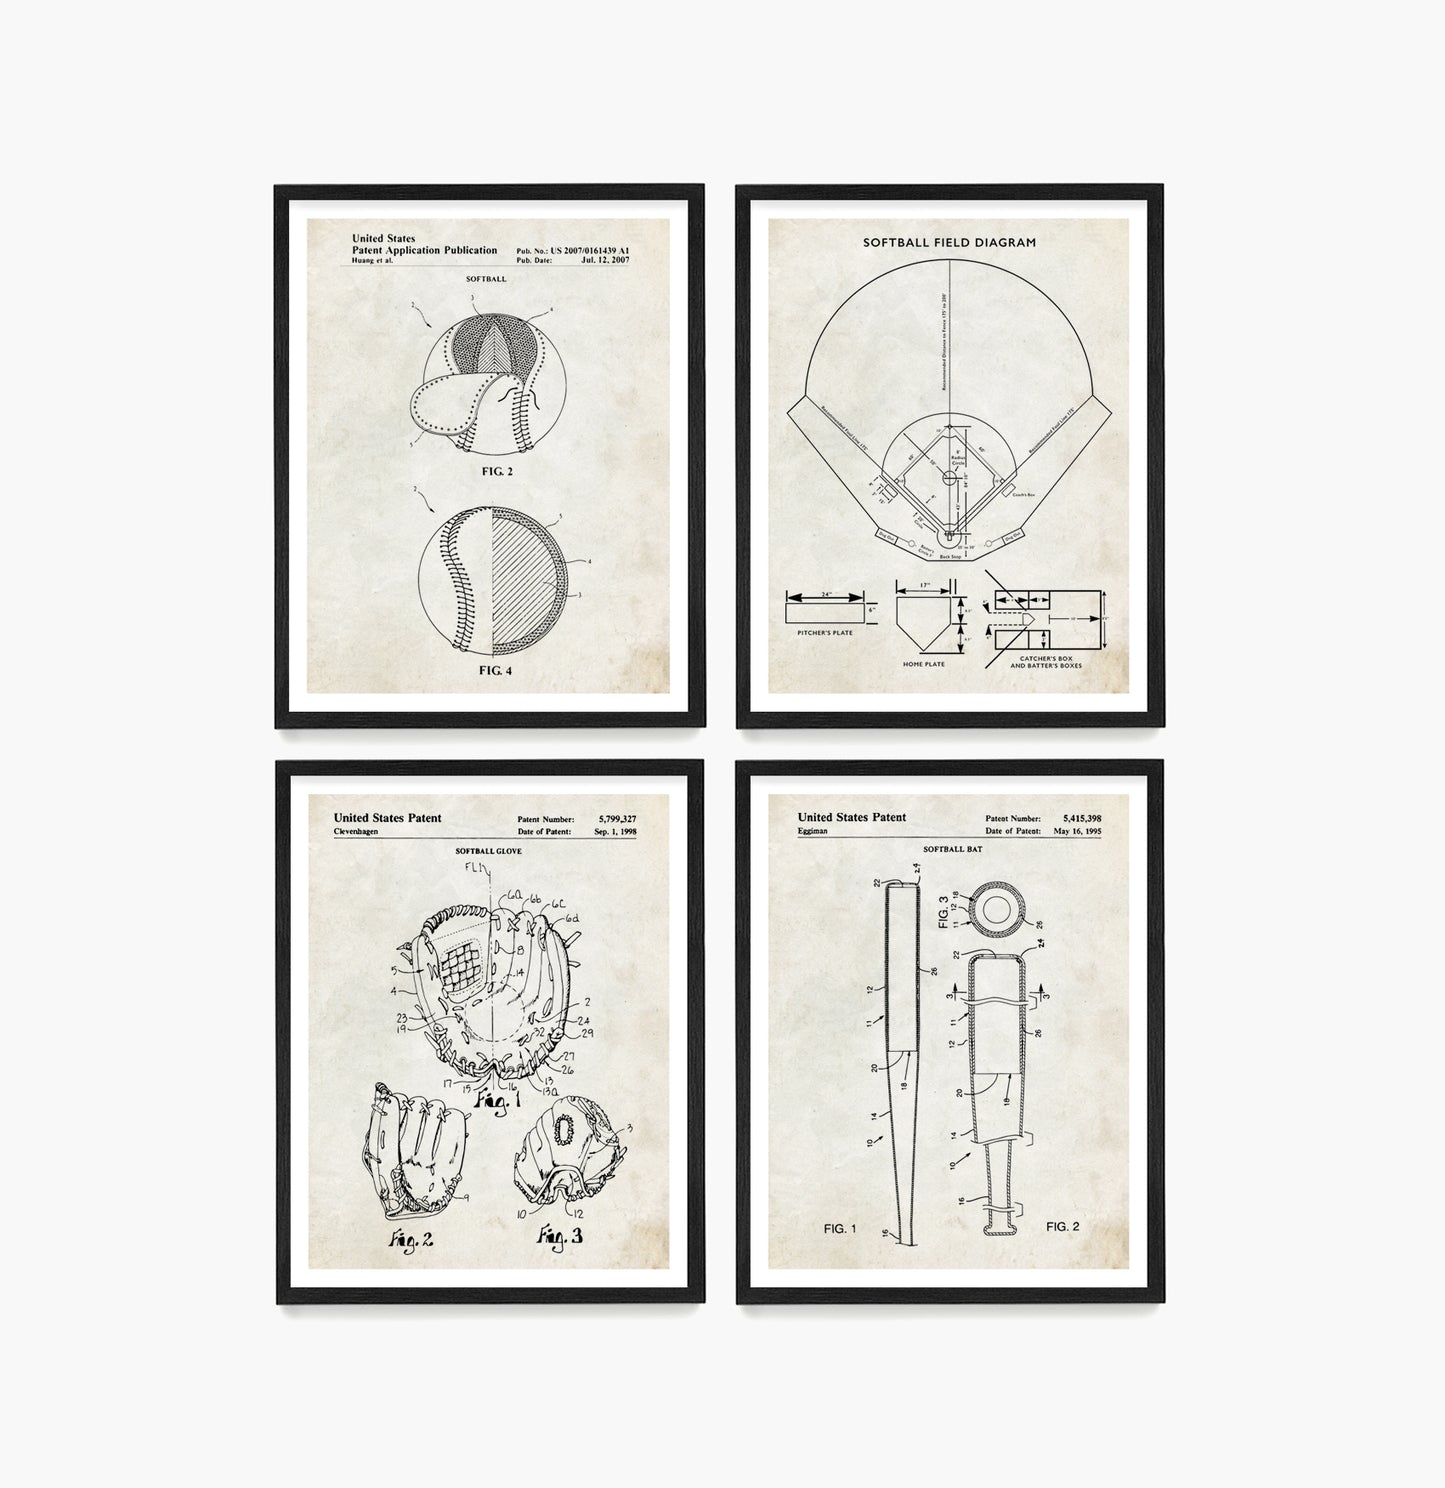 Softball Patent Poster, Softball Wall Art